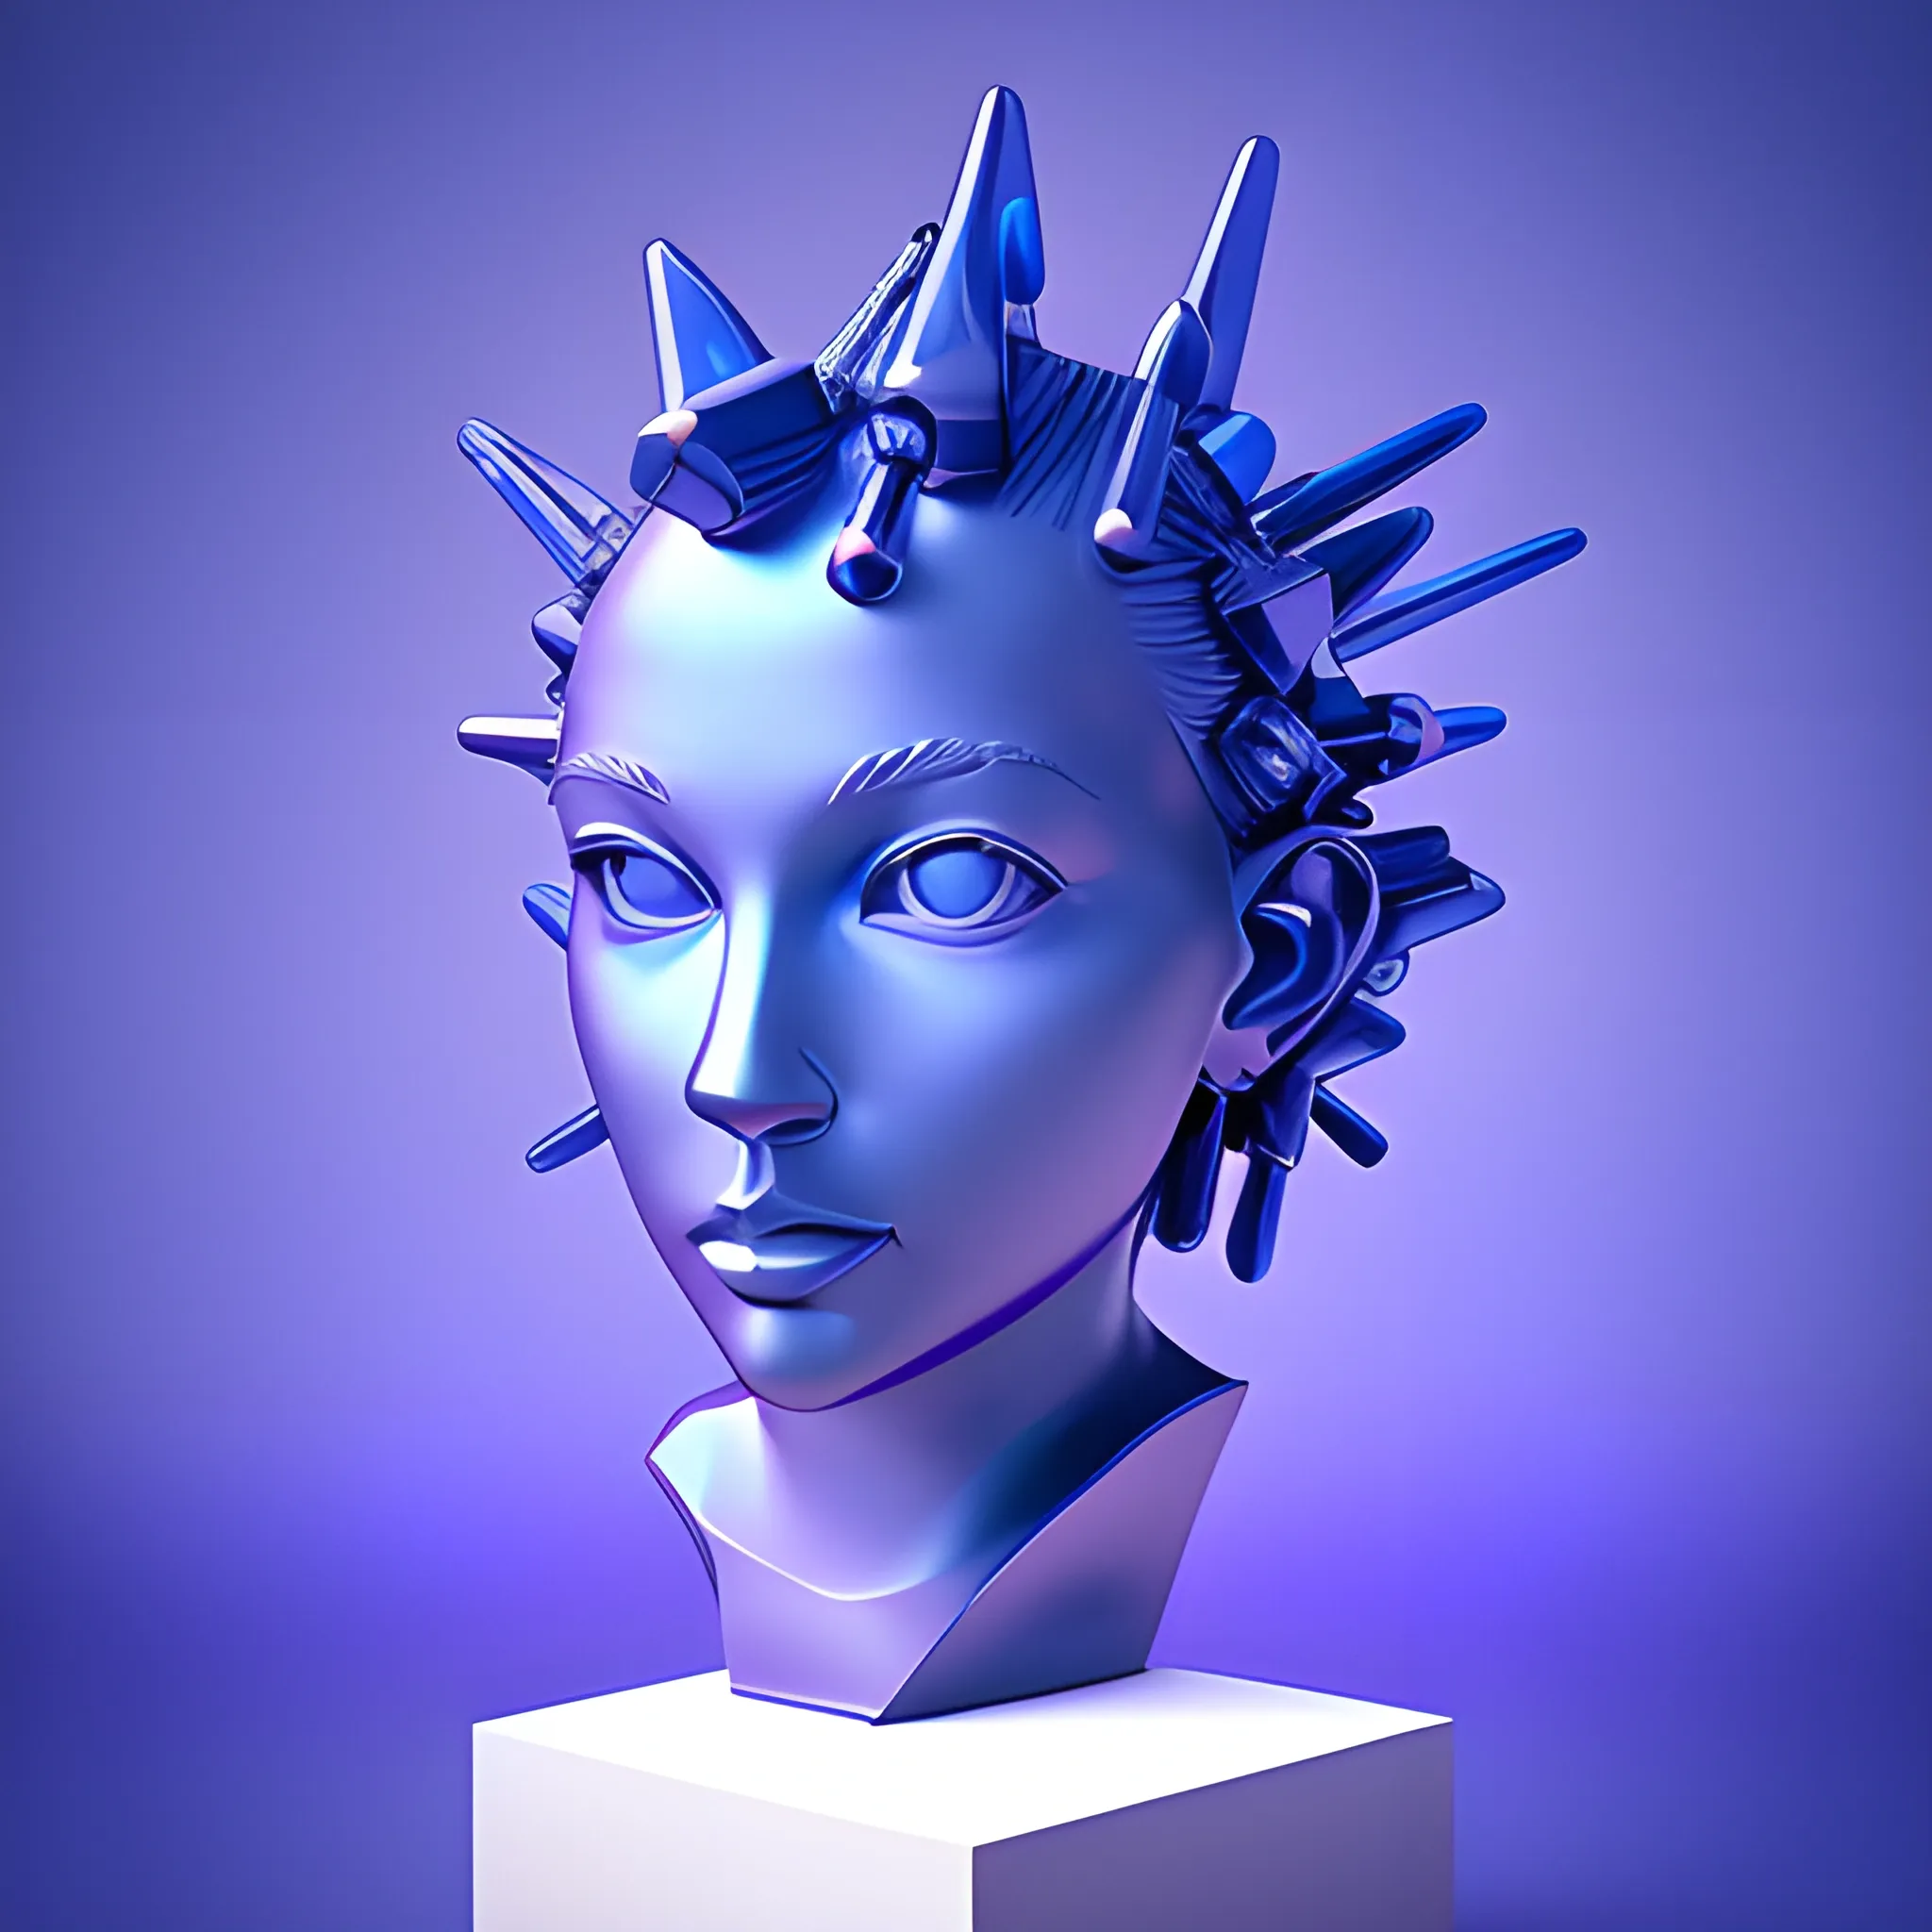 3D sculpture, Sky, art, blue, camaïeu, purple blue, electronic, matrix